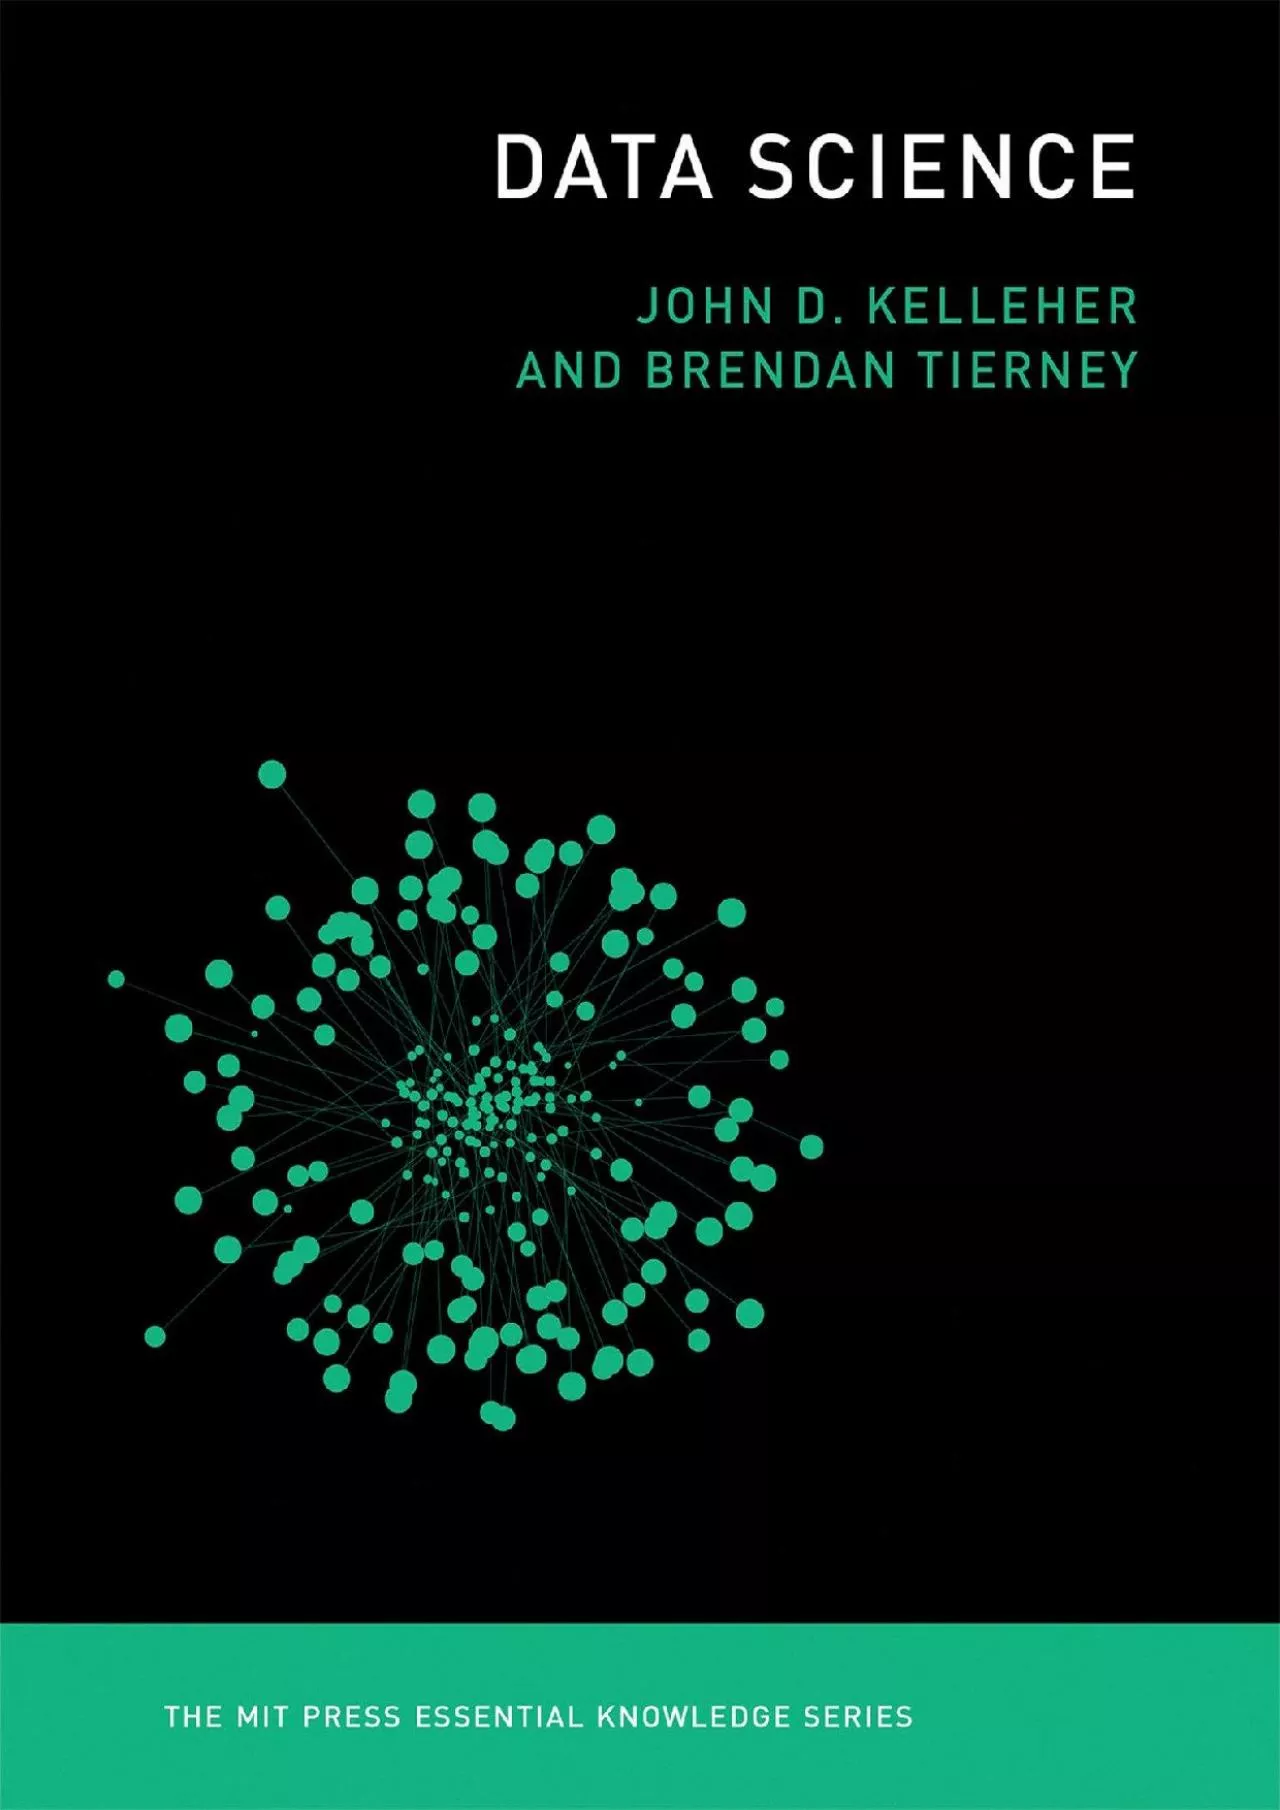 (EBOOK)-Data Science (The MIT Press Essential Knowledge series)